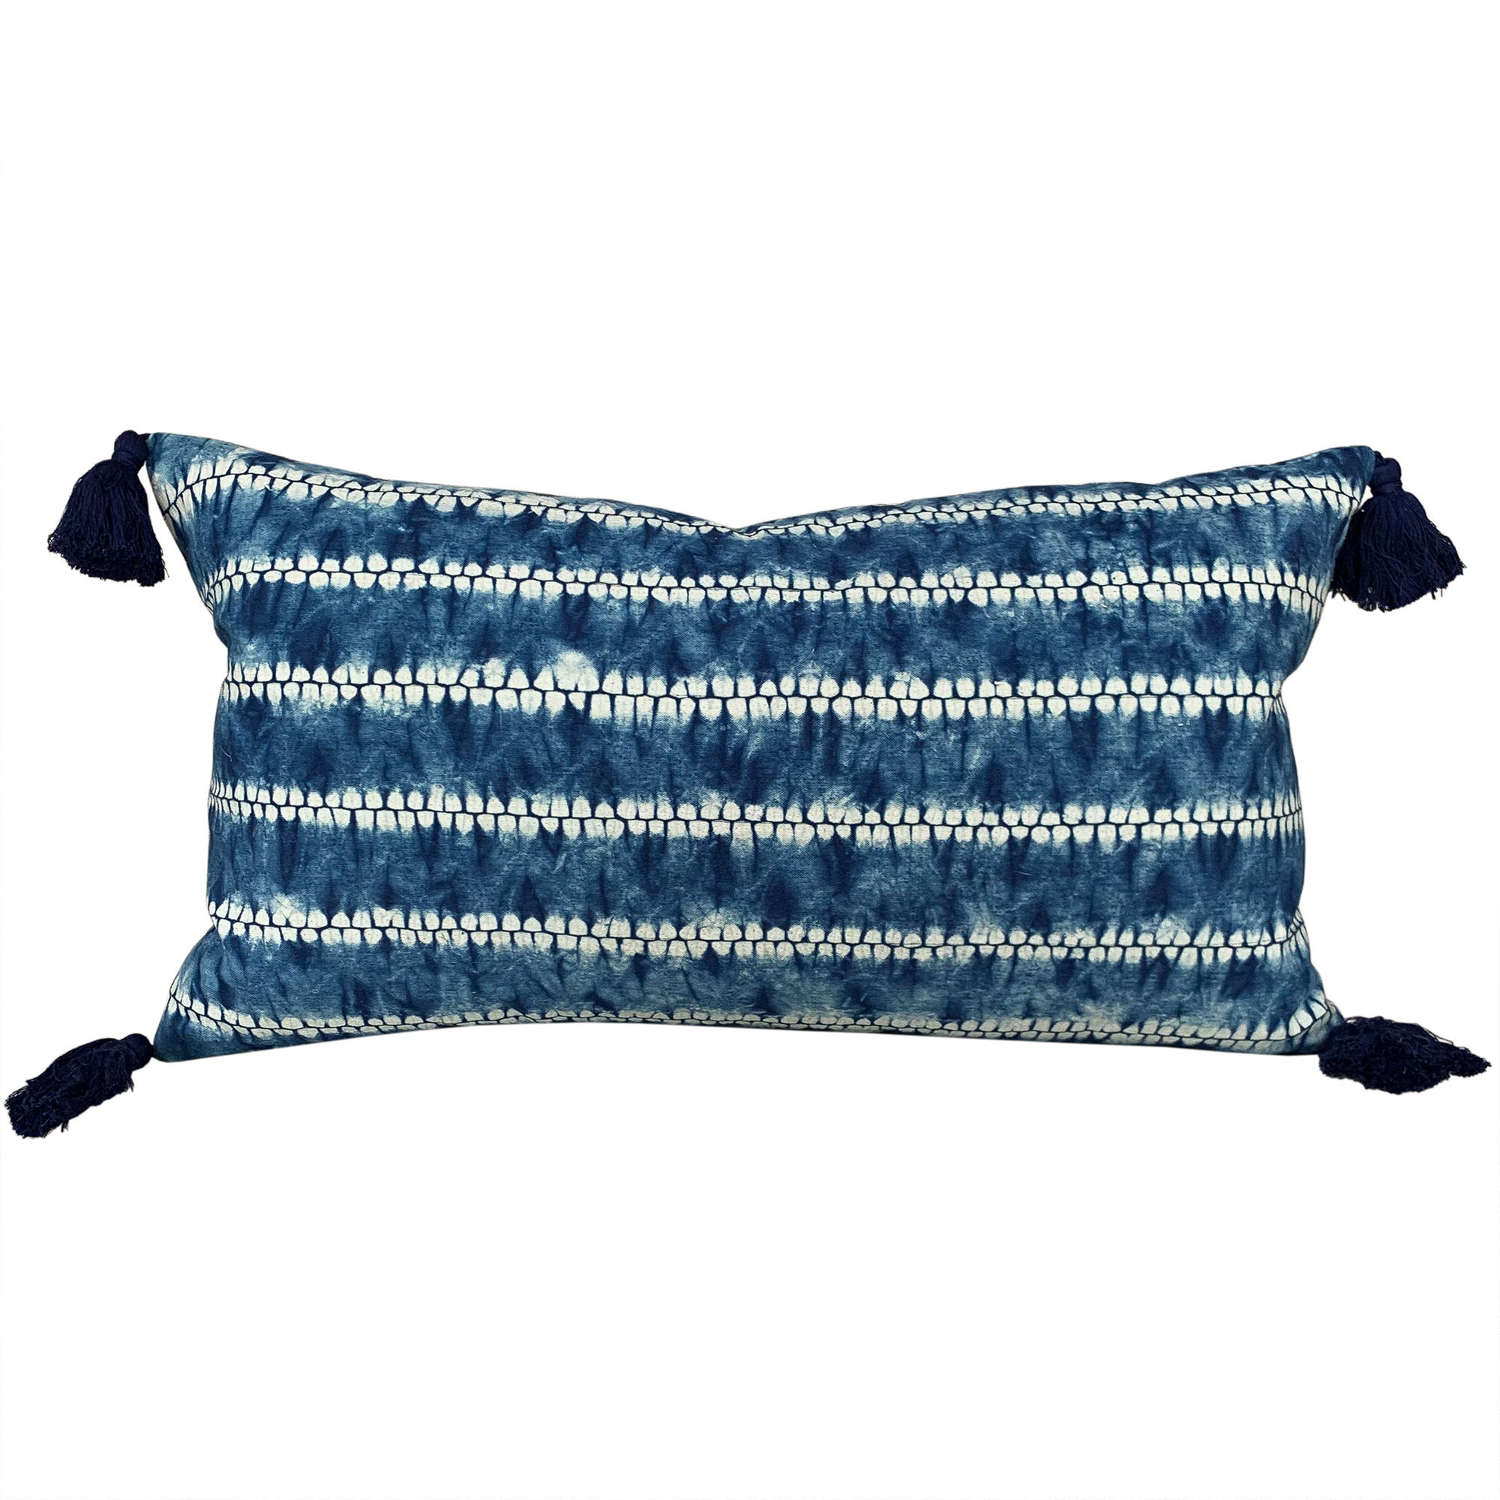 Shibori cushions with tassels